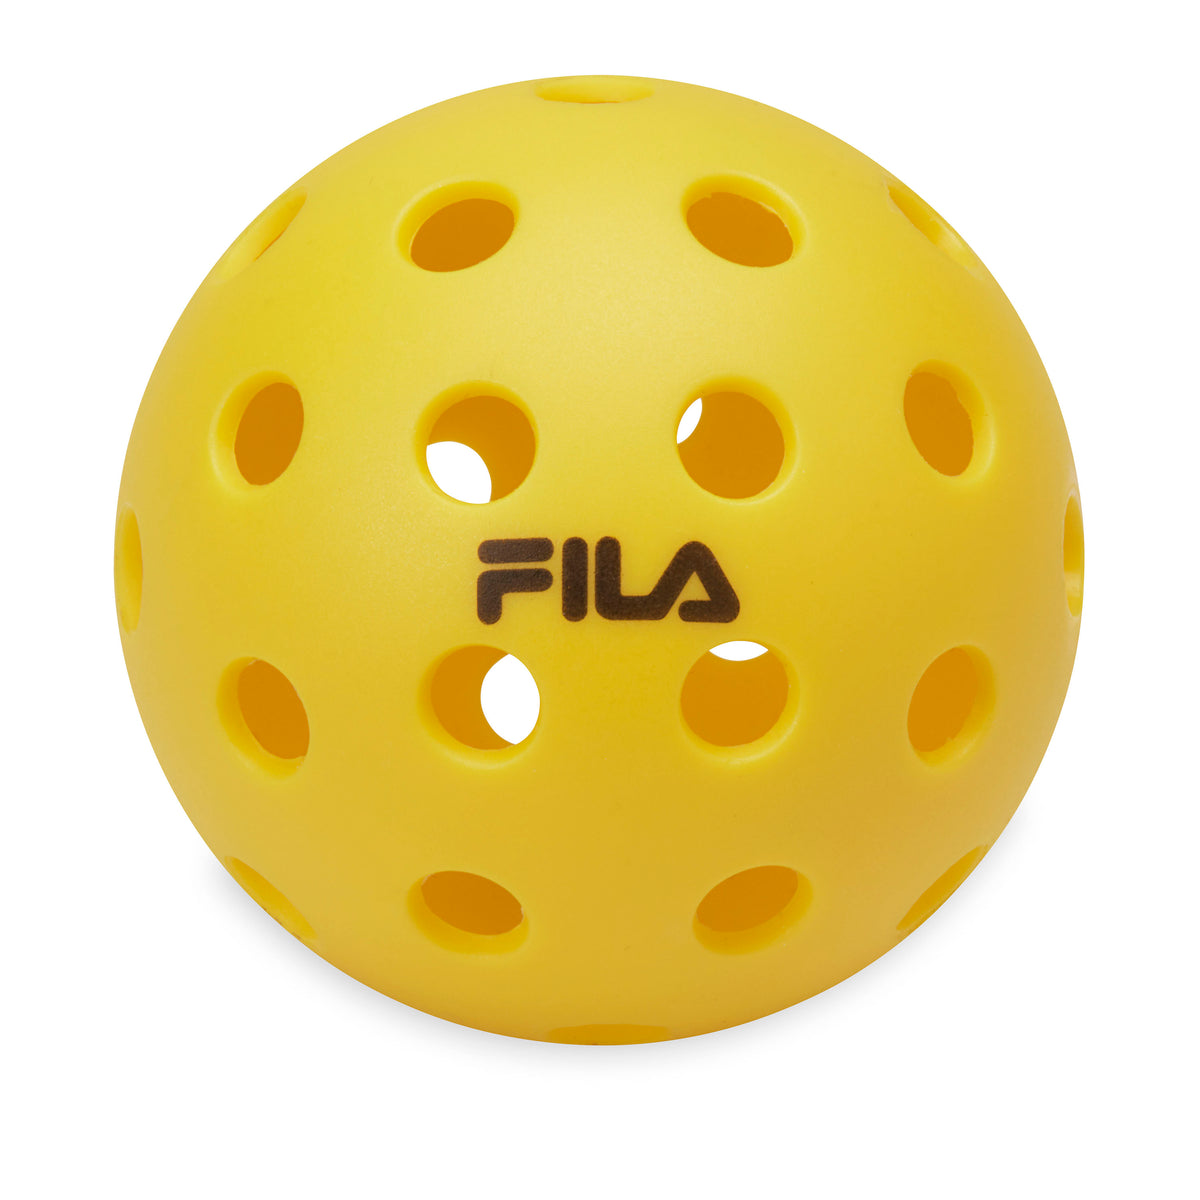 FILA Outdoor Pickleballs (4-Pack) Yellow single ball